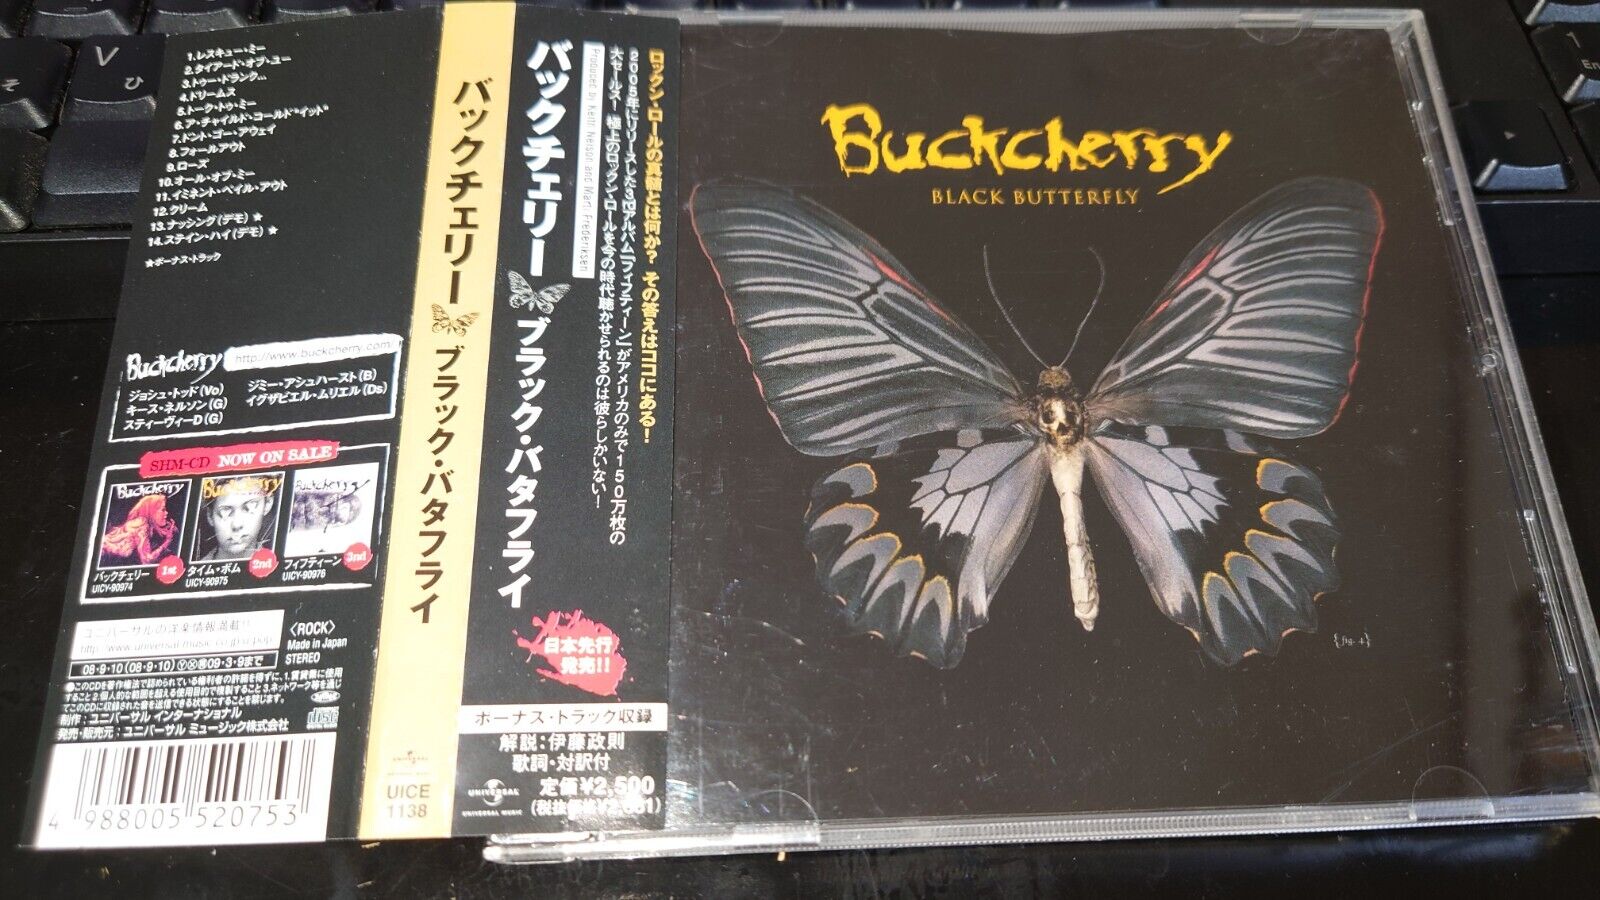 BACK CHERRY / BLACK BUTTERFLY+2 JAPAN CD with OBI